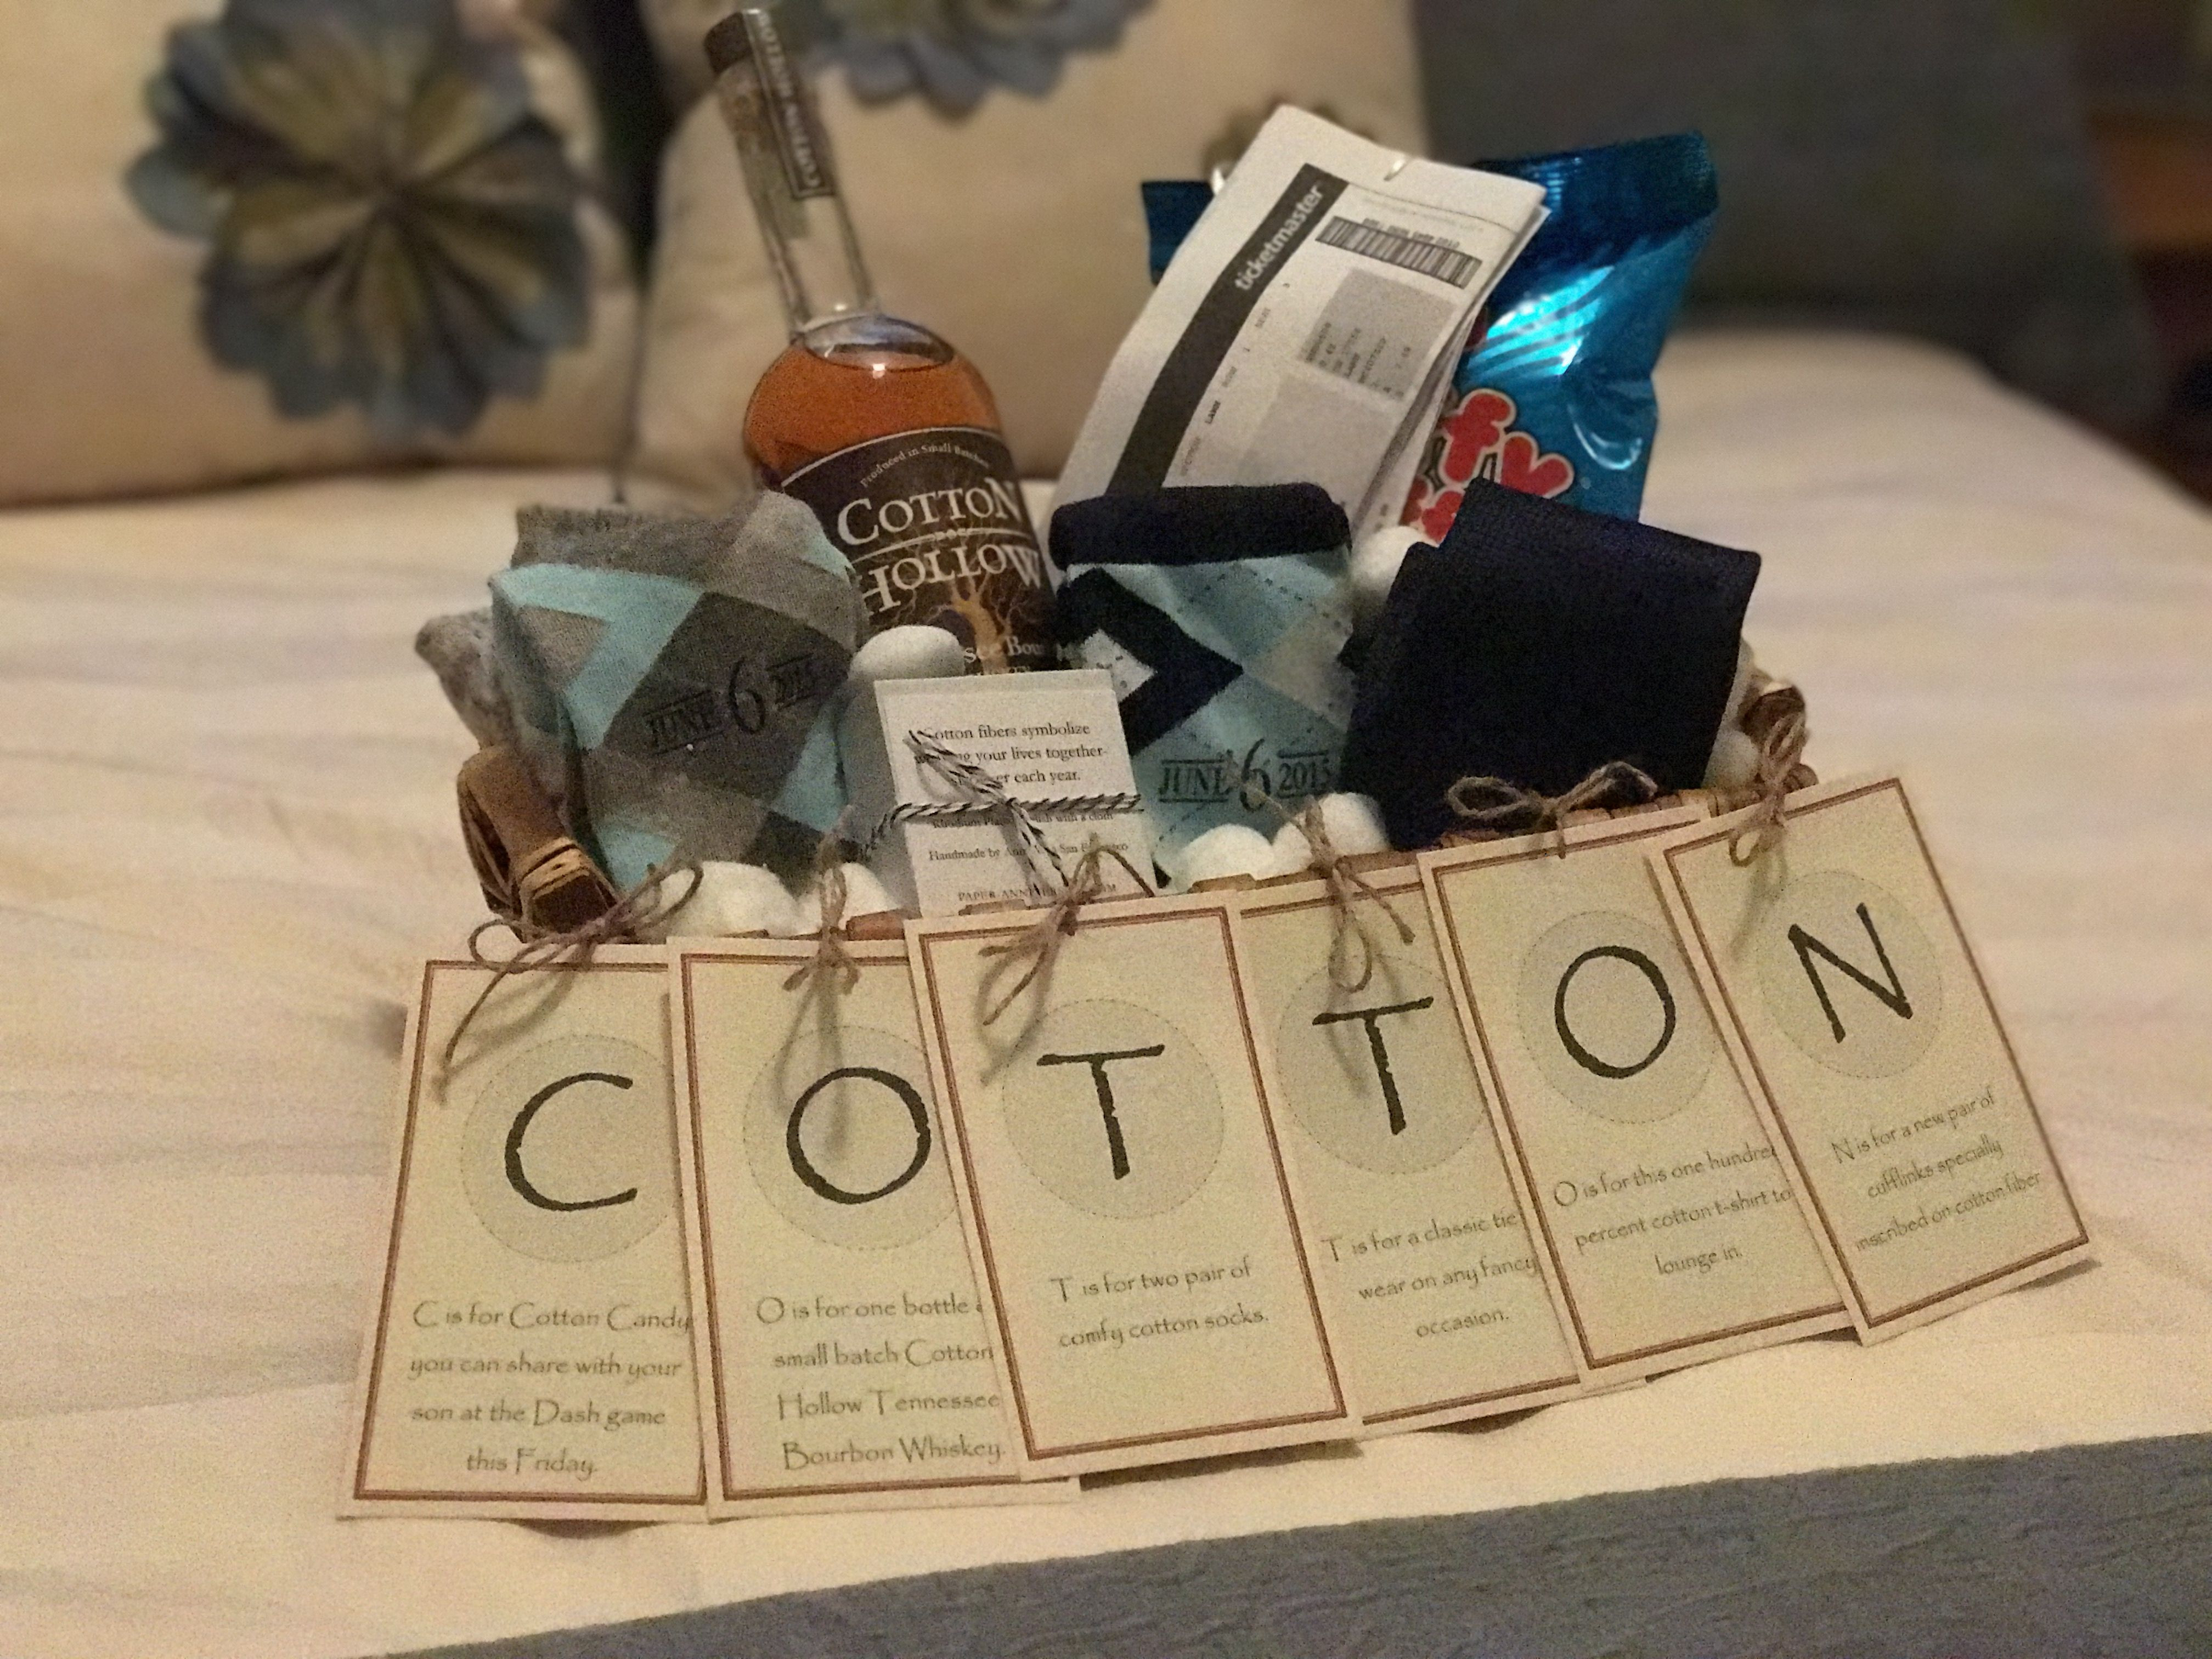 Best ideas about Cotton Anniversary Gift Ideas
. Save or Pin The "Cotton" Anniversary Gift for Him Now.